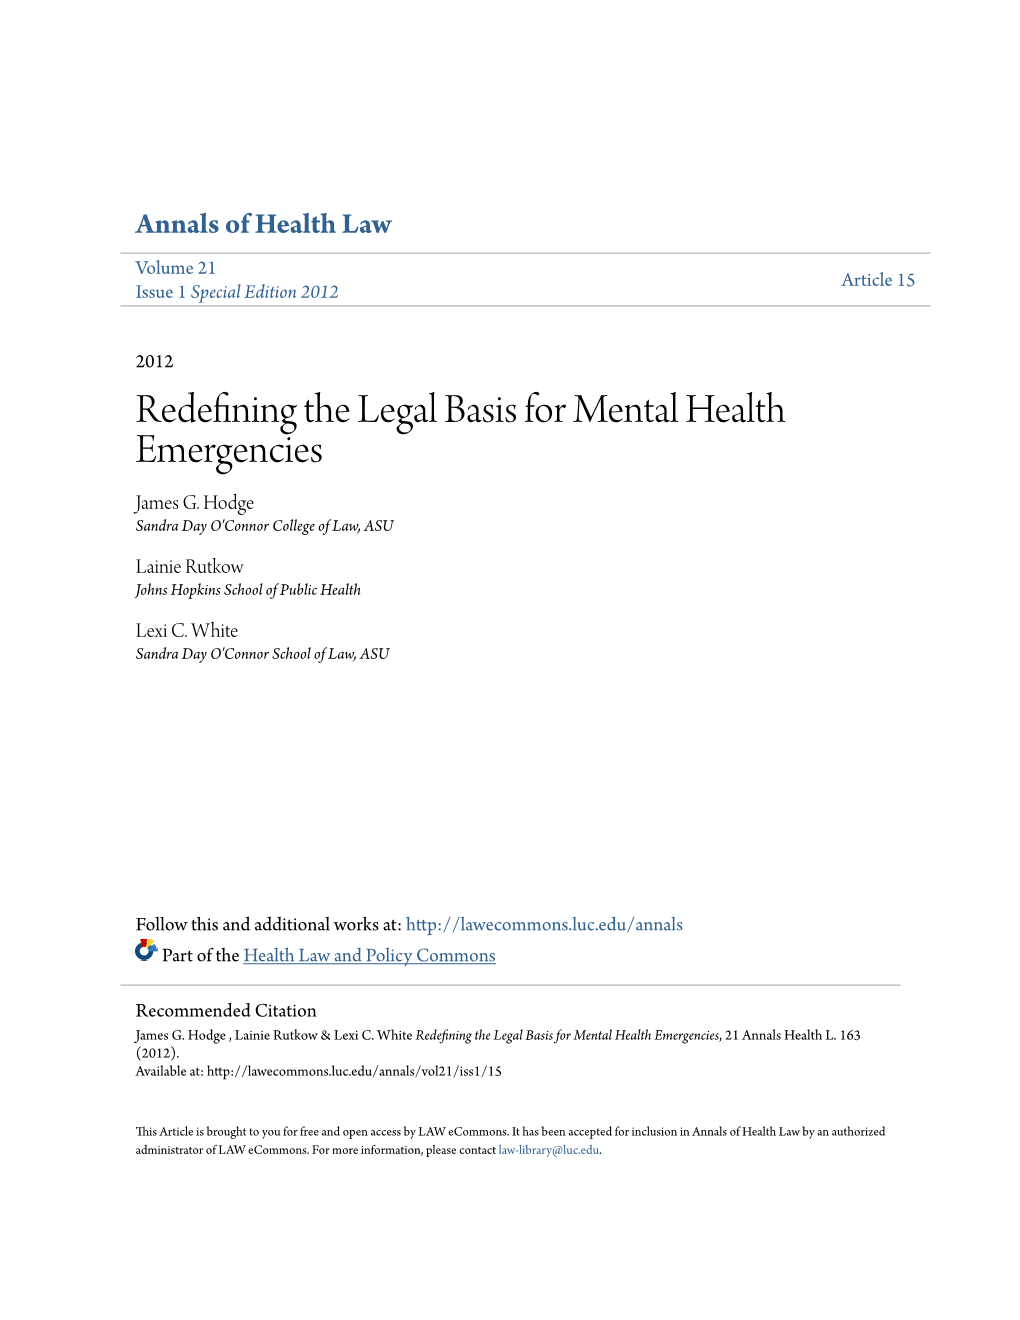 Redefining the Legal Basis for Mental Health Emergencies James G